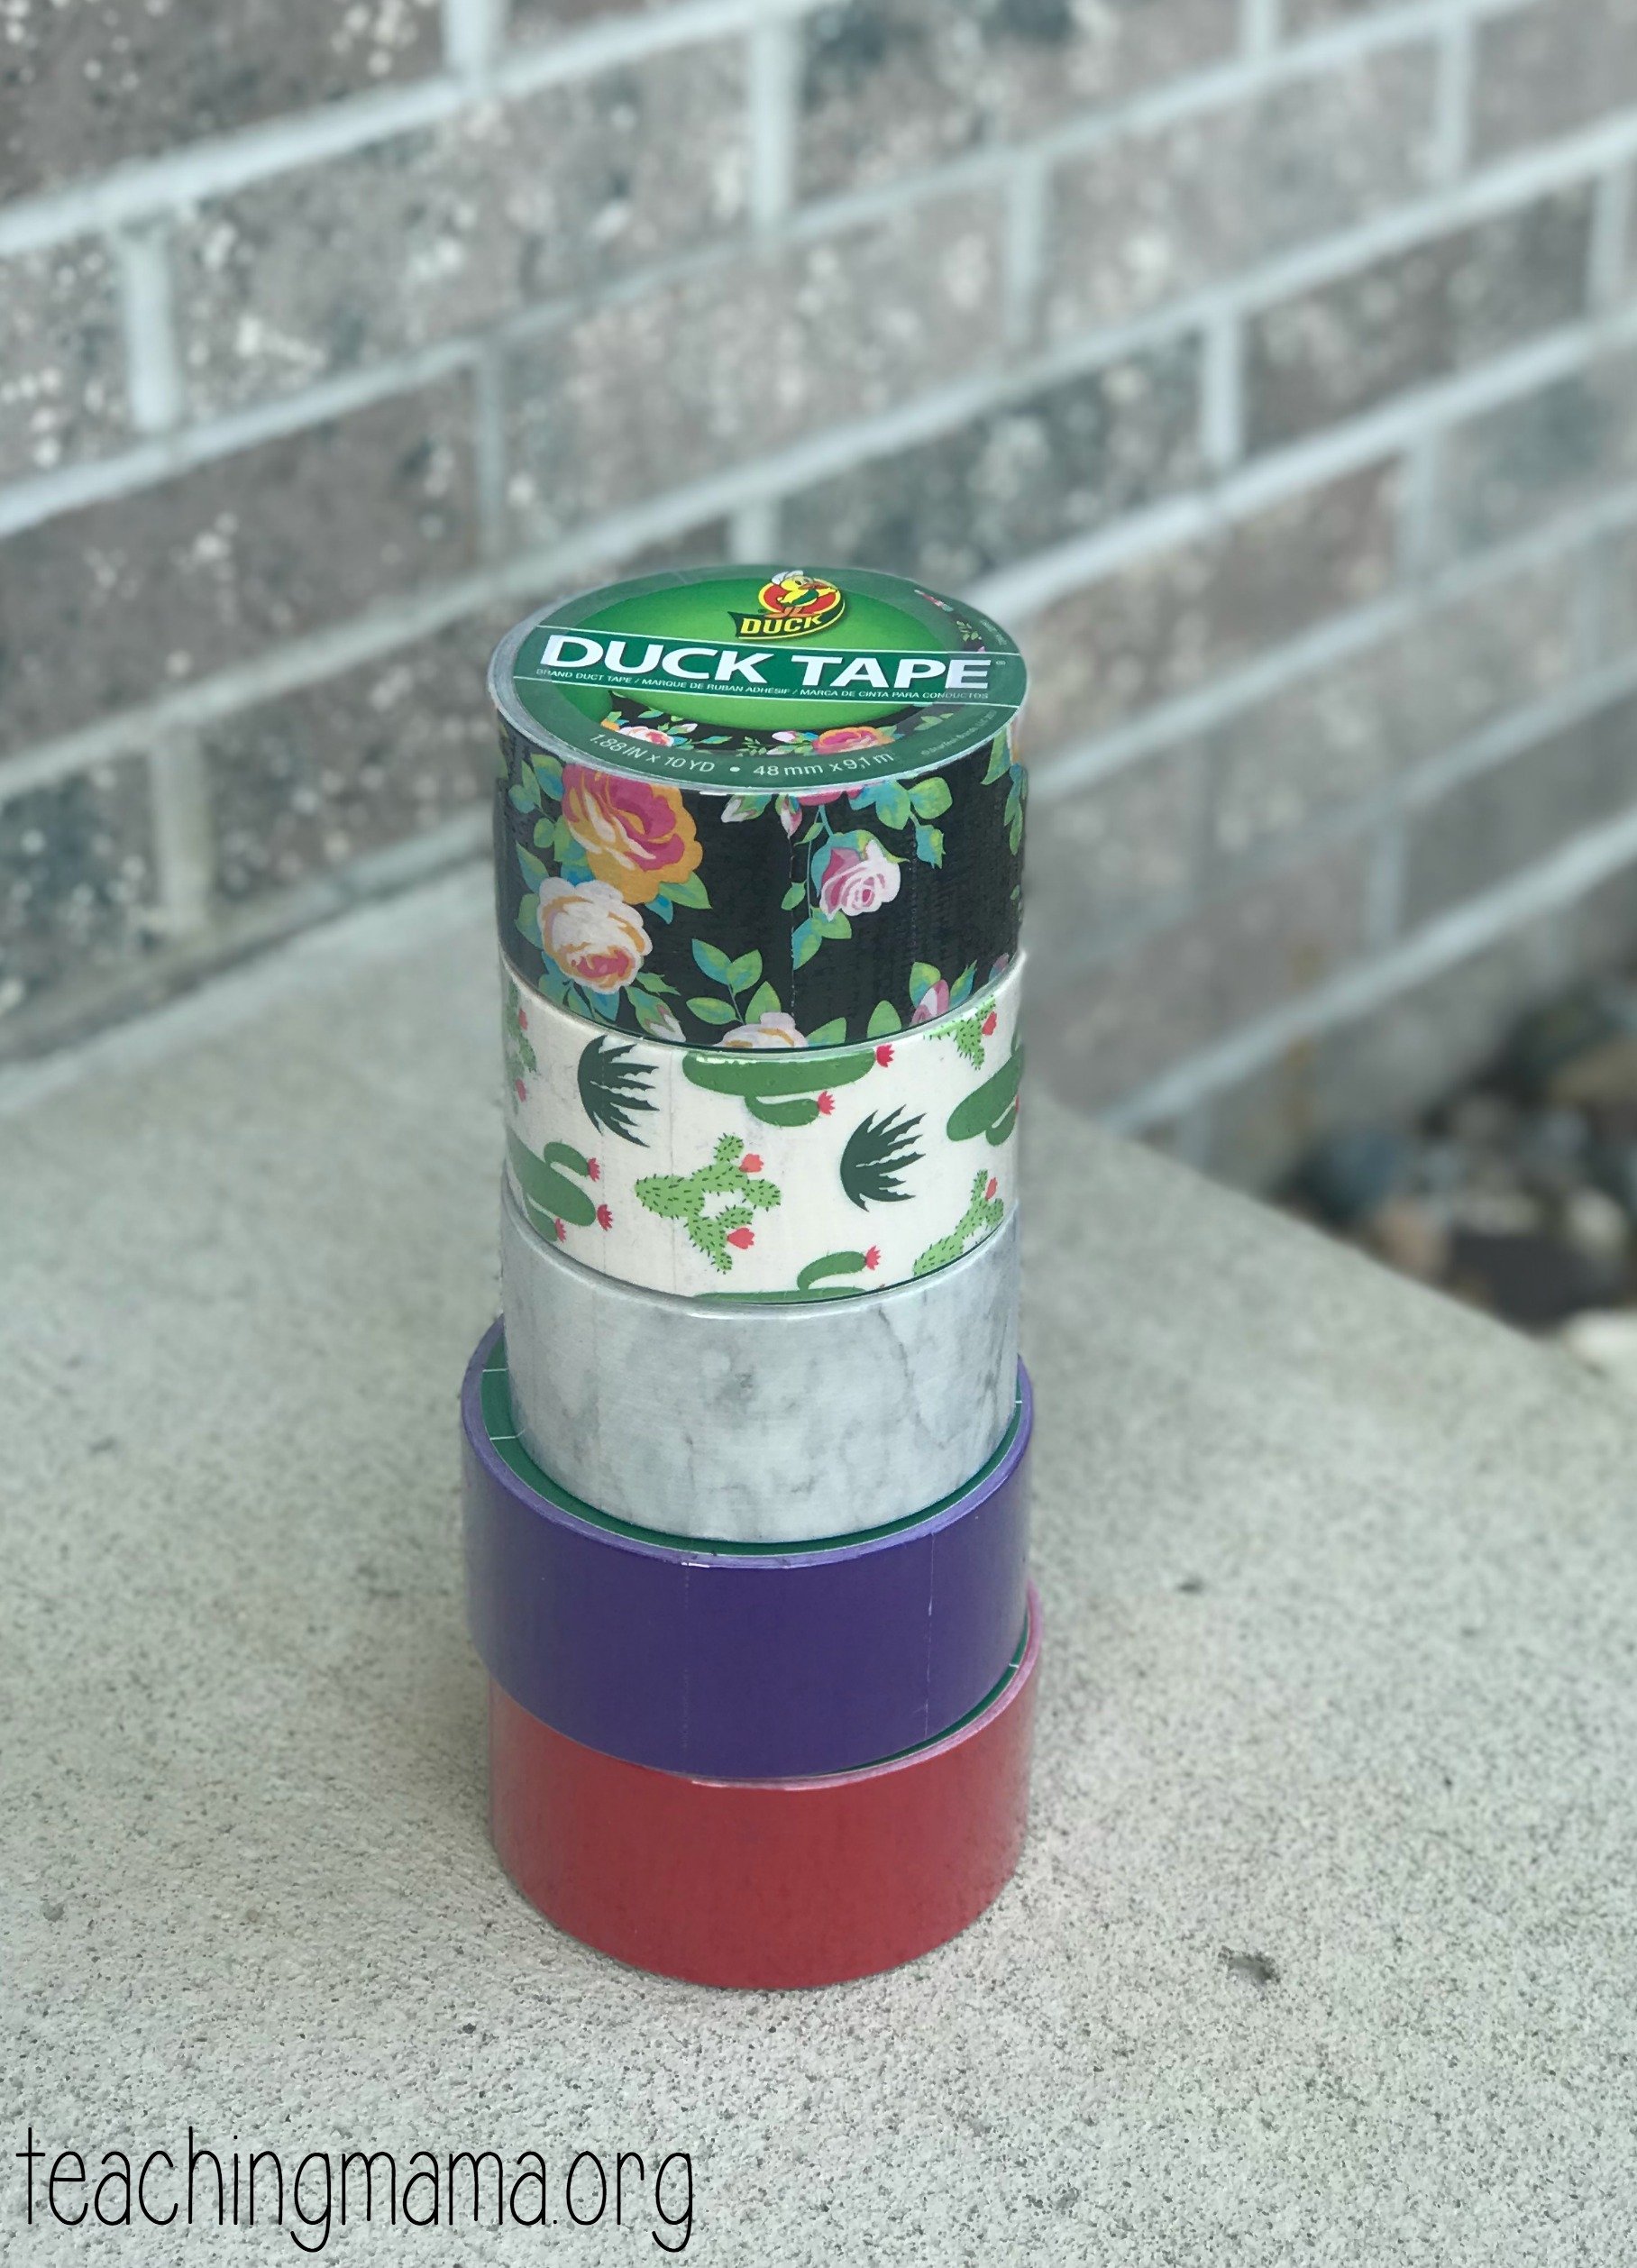 assortment of duck tape